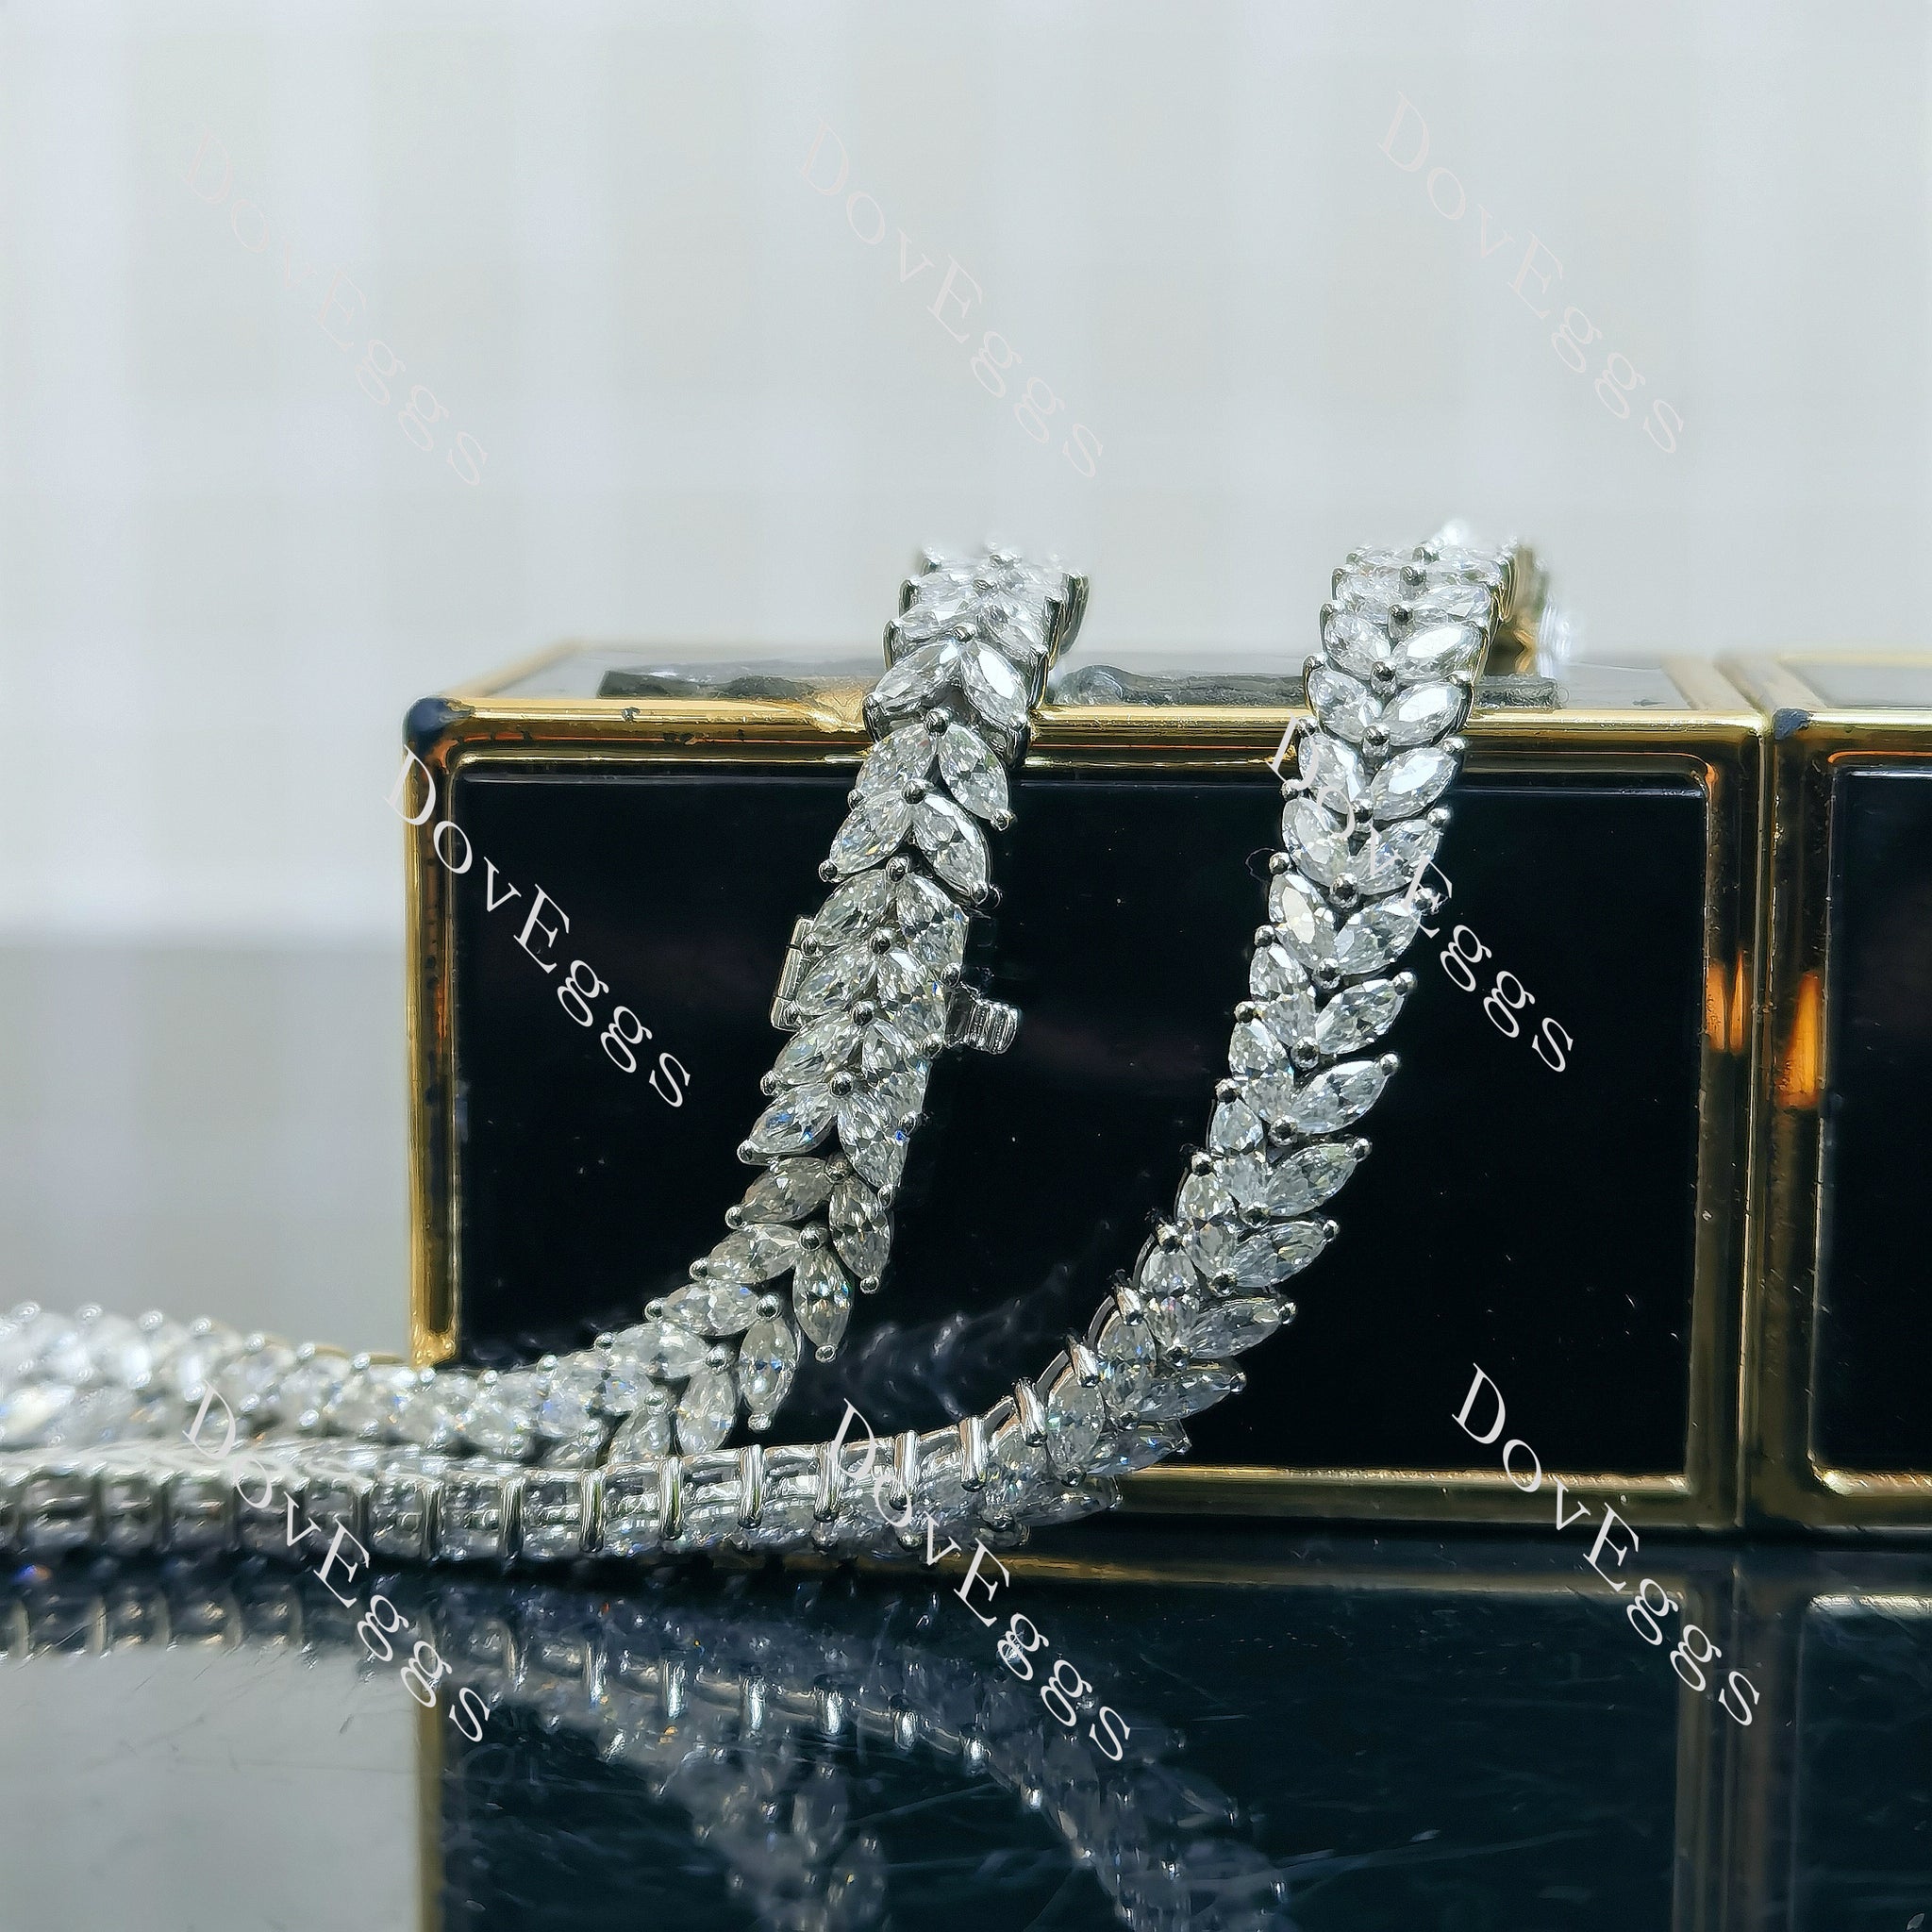 Doveggs vine shape marquise moissanite necklace for women (16inch length)